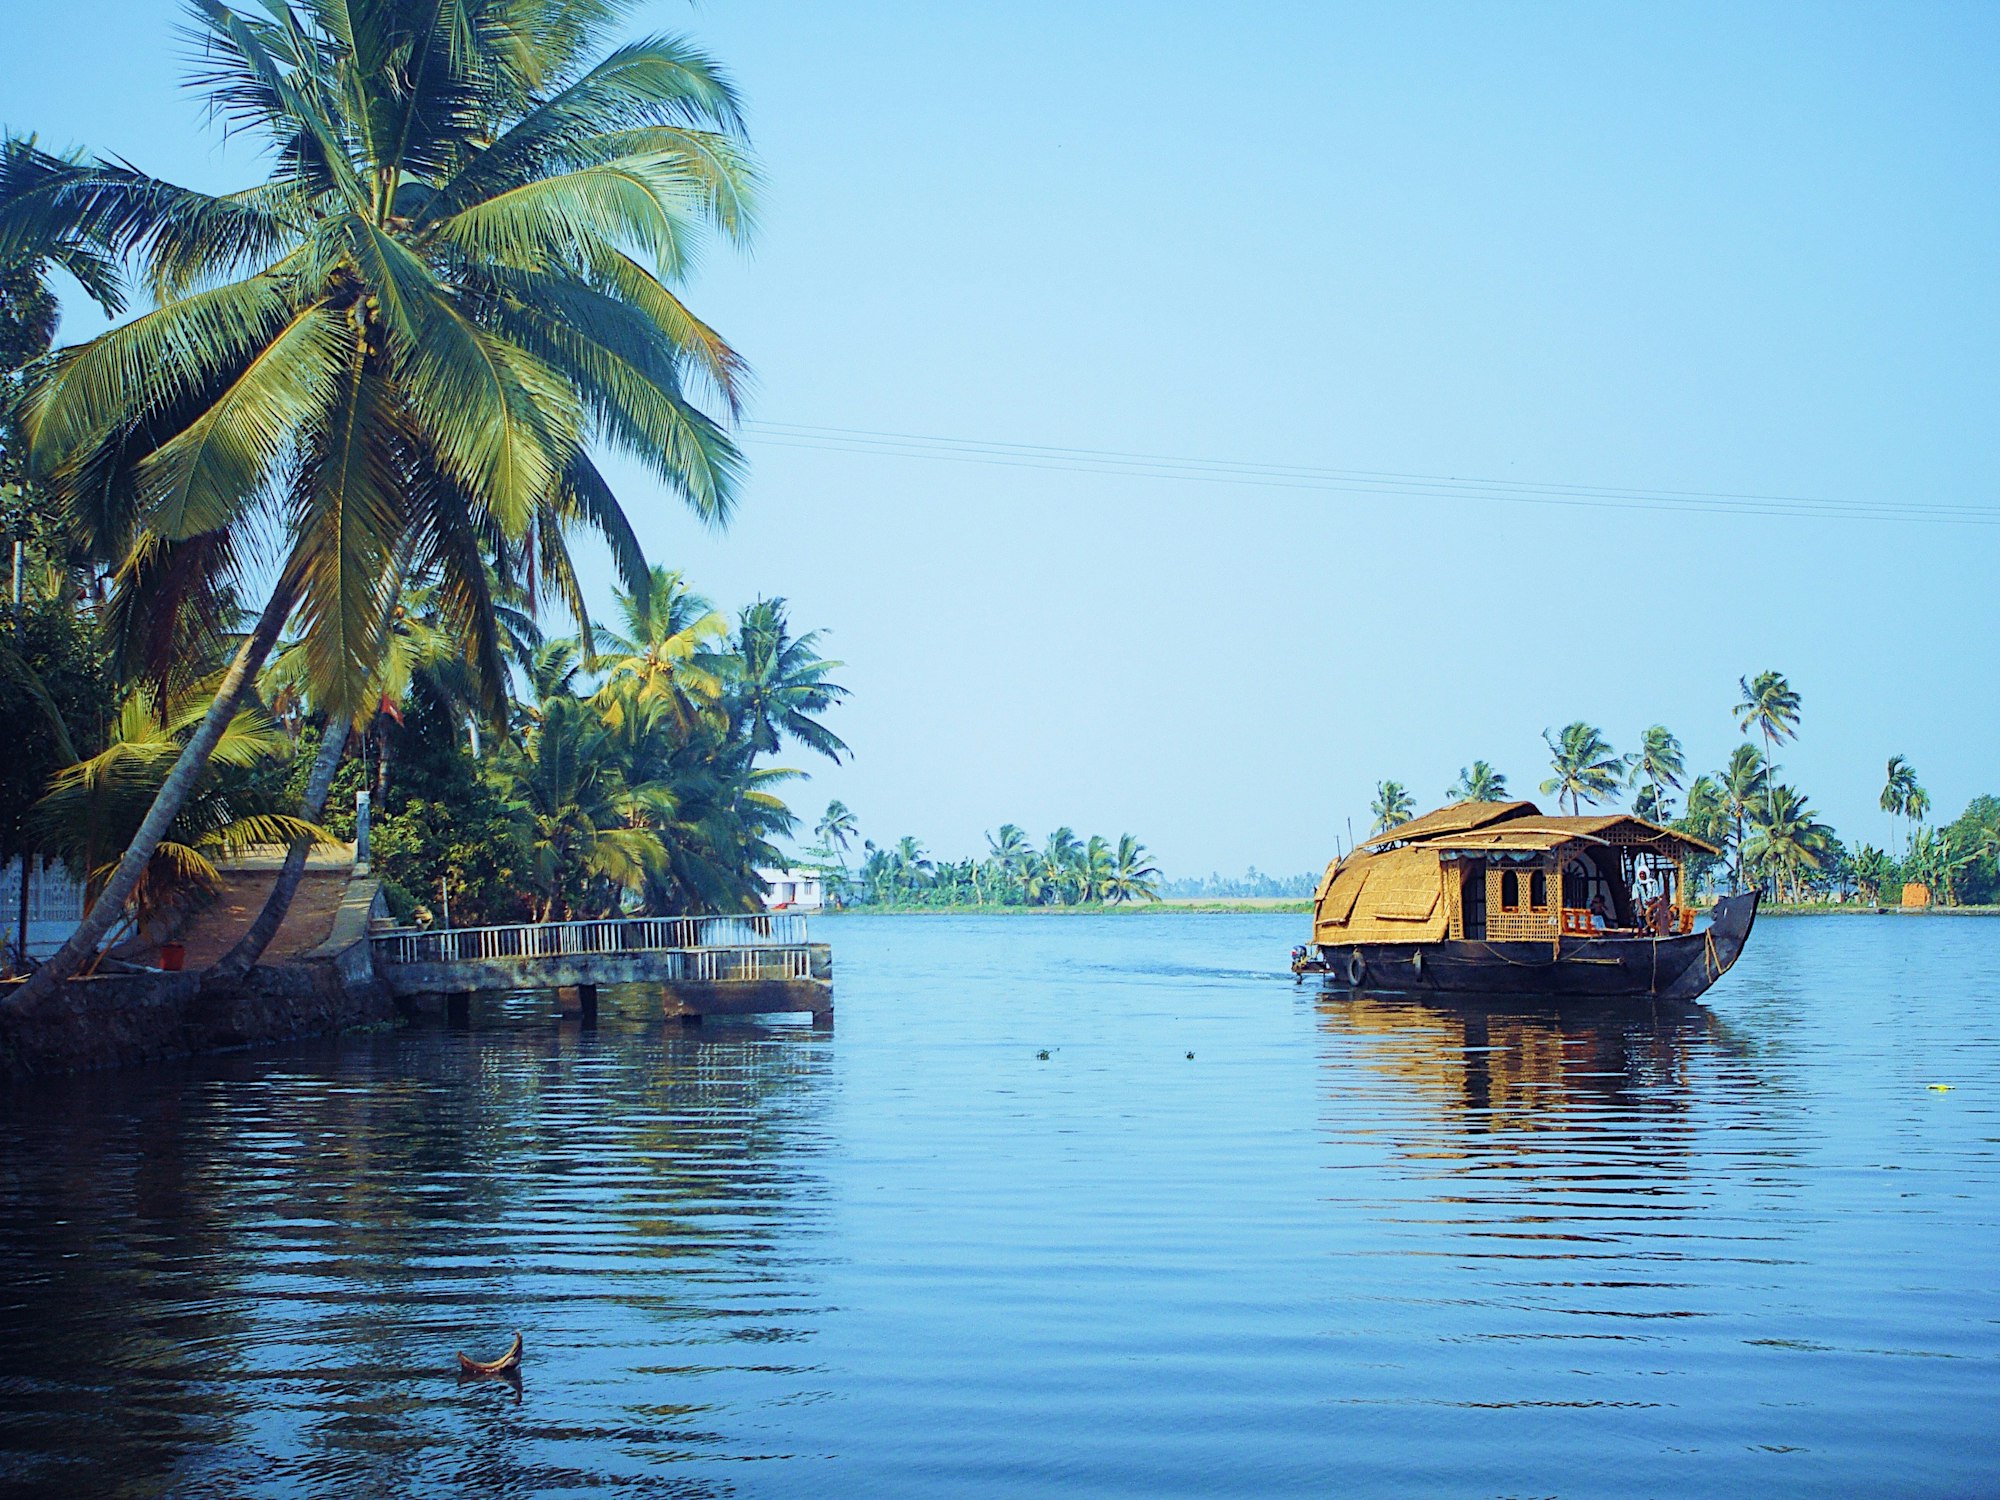 Traveling backwaters in Kerala India